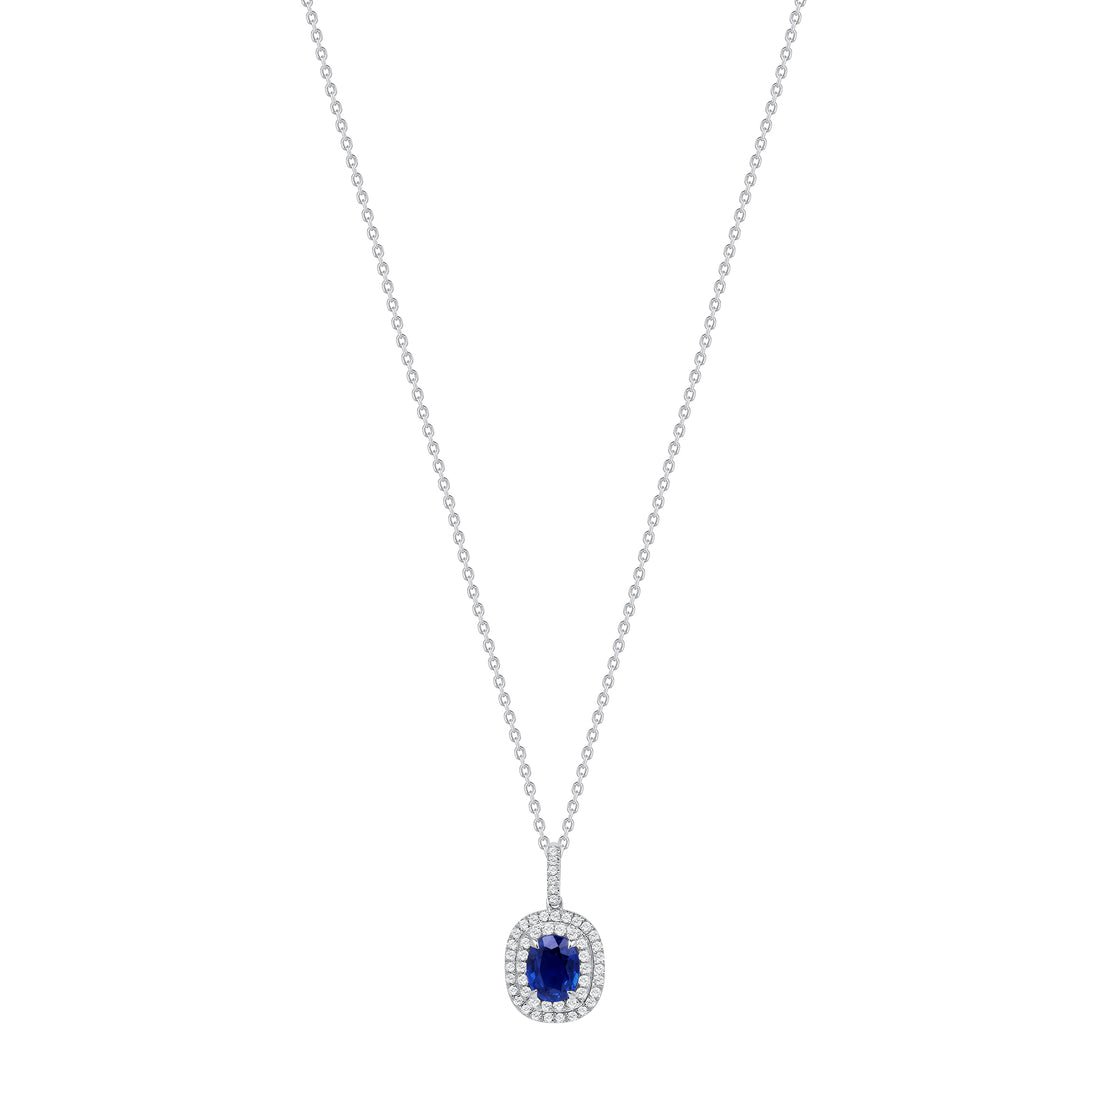 2.34 CT. Oval Cut Blue Sapphire and Round Brilliant Diamond Halo Pendant Necklace in 14k White Gold